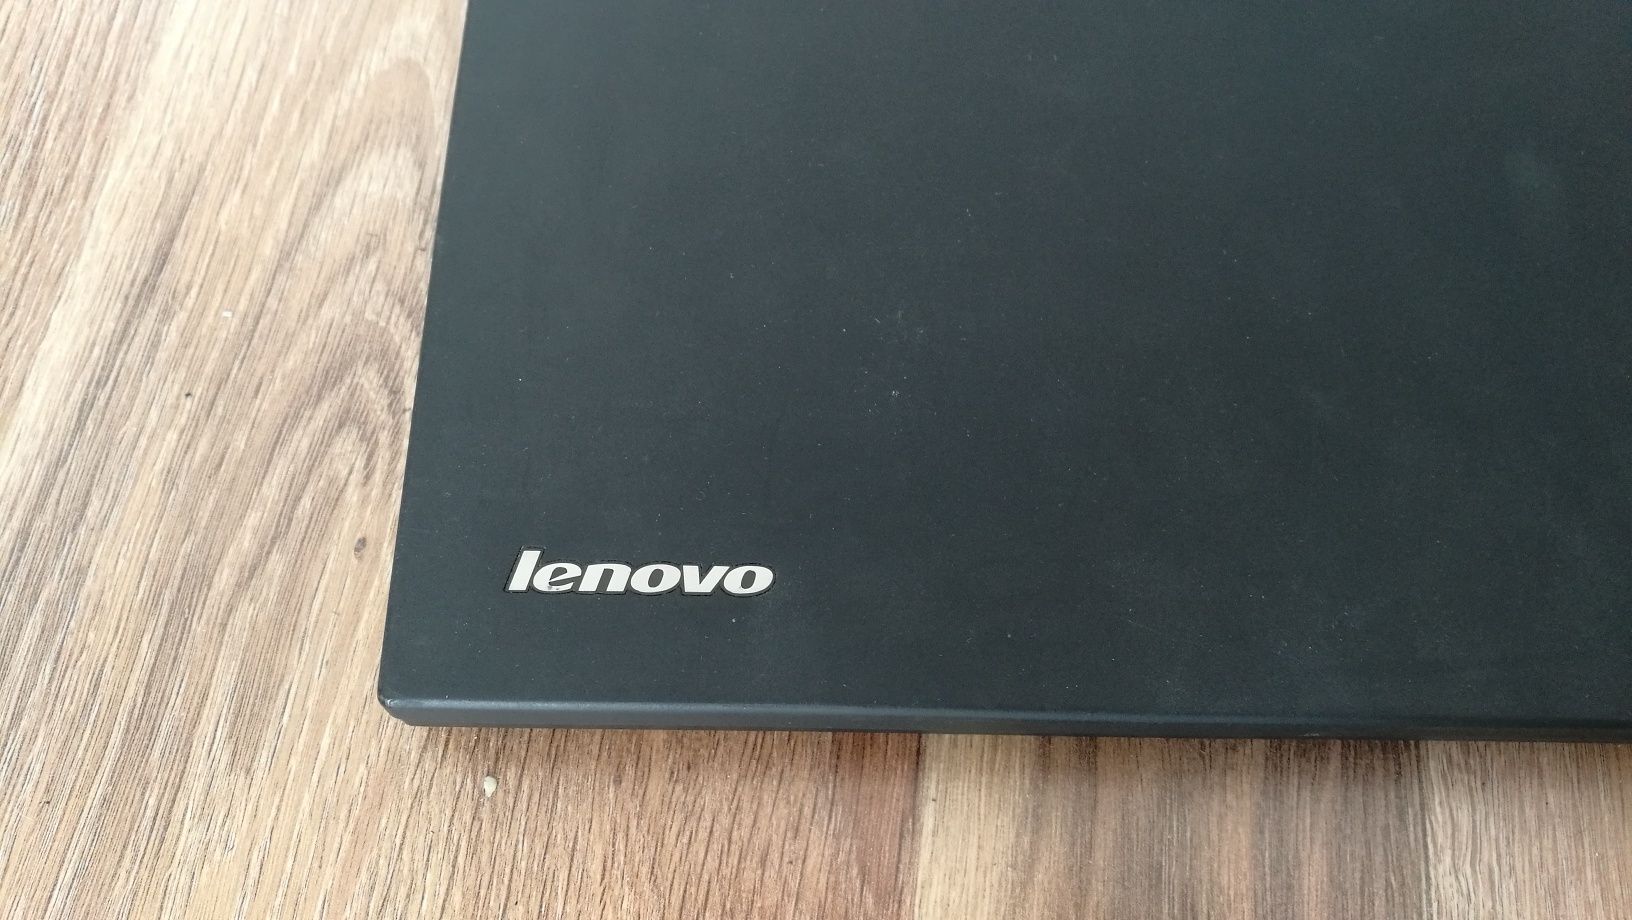 Laptop Lenovo t420 i5